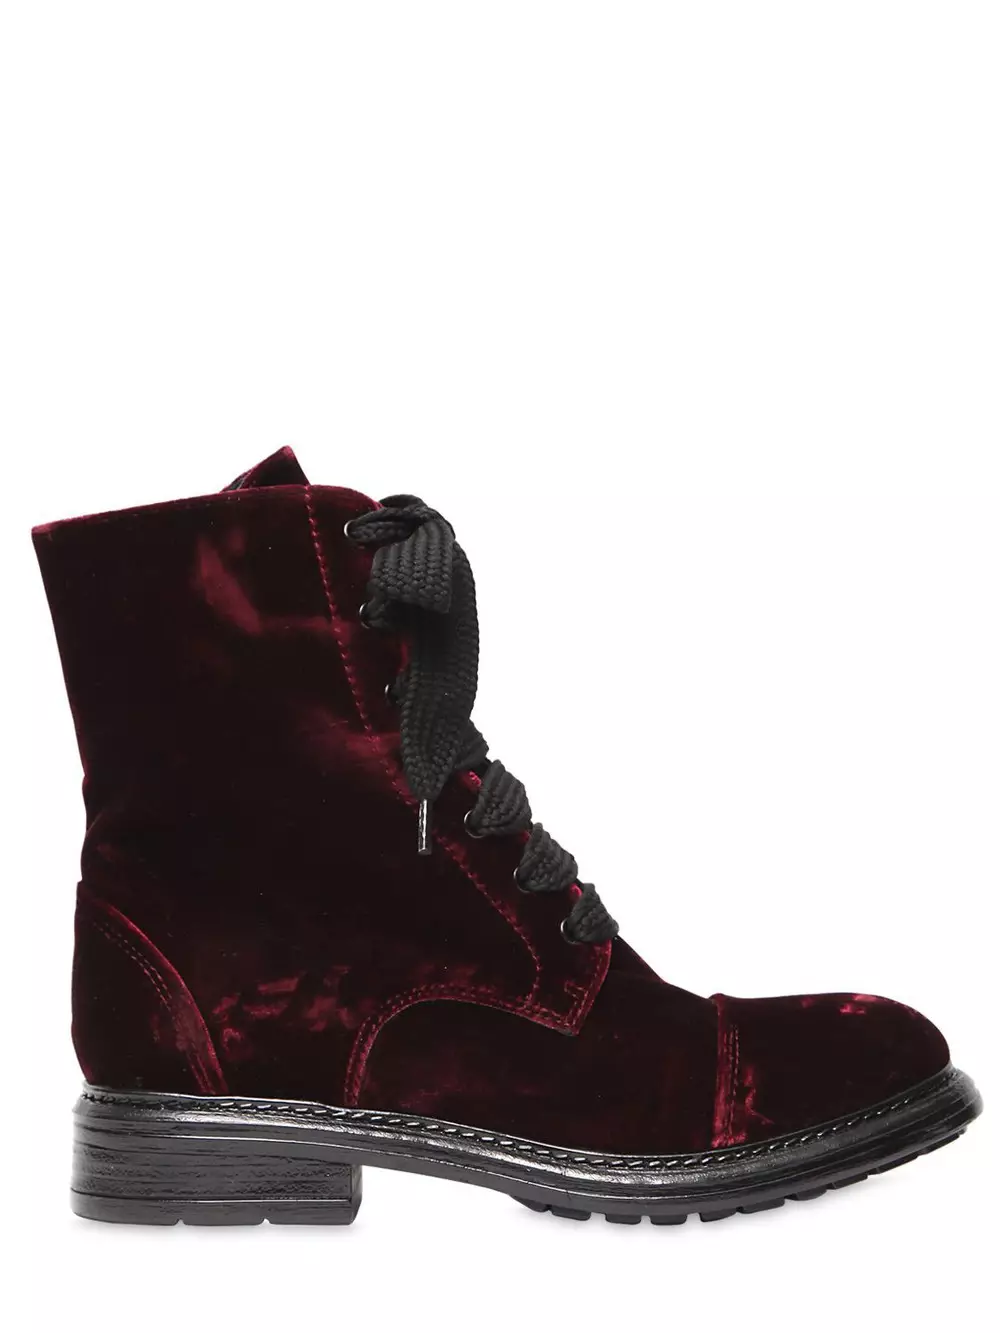 Boots (135 wêne): Trendên Fashion 2021, ji Rock Rock, Eva, Camel, Grinders, How to Wear Derby With Jeans, Mîlîtar & Burgundy Style 1842_73